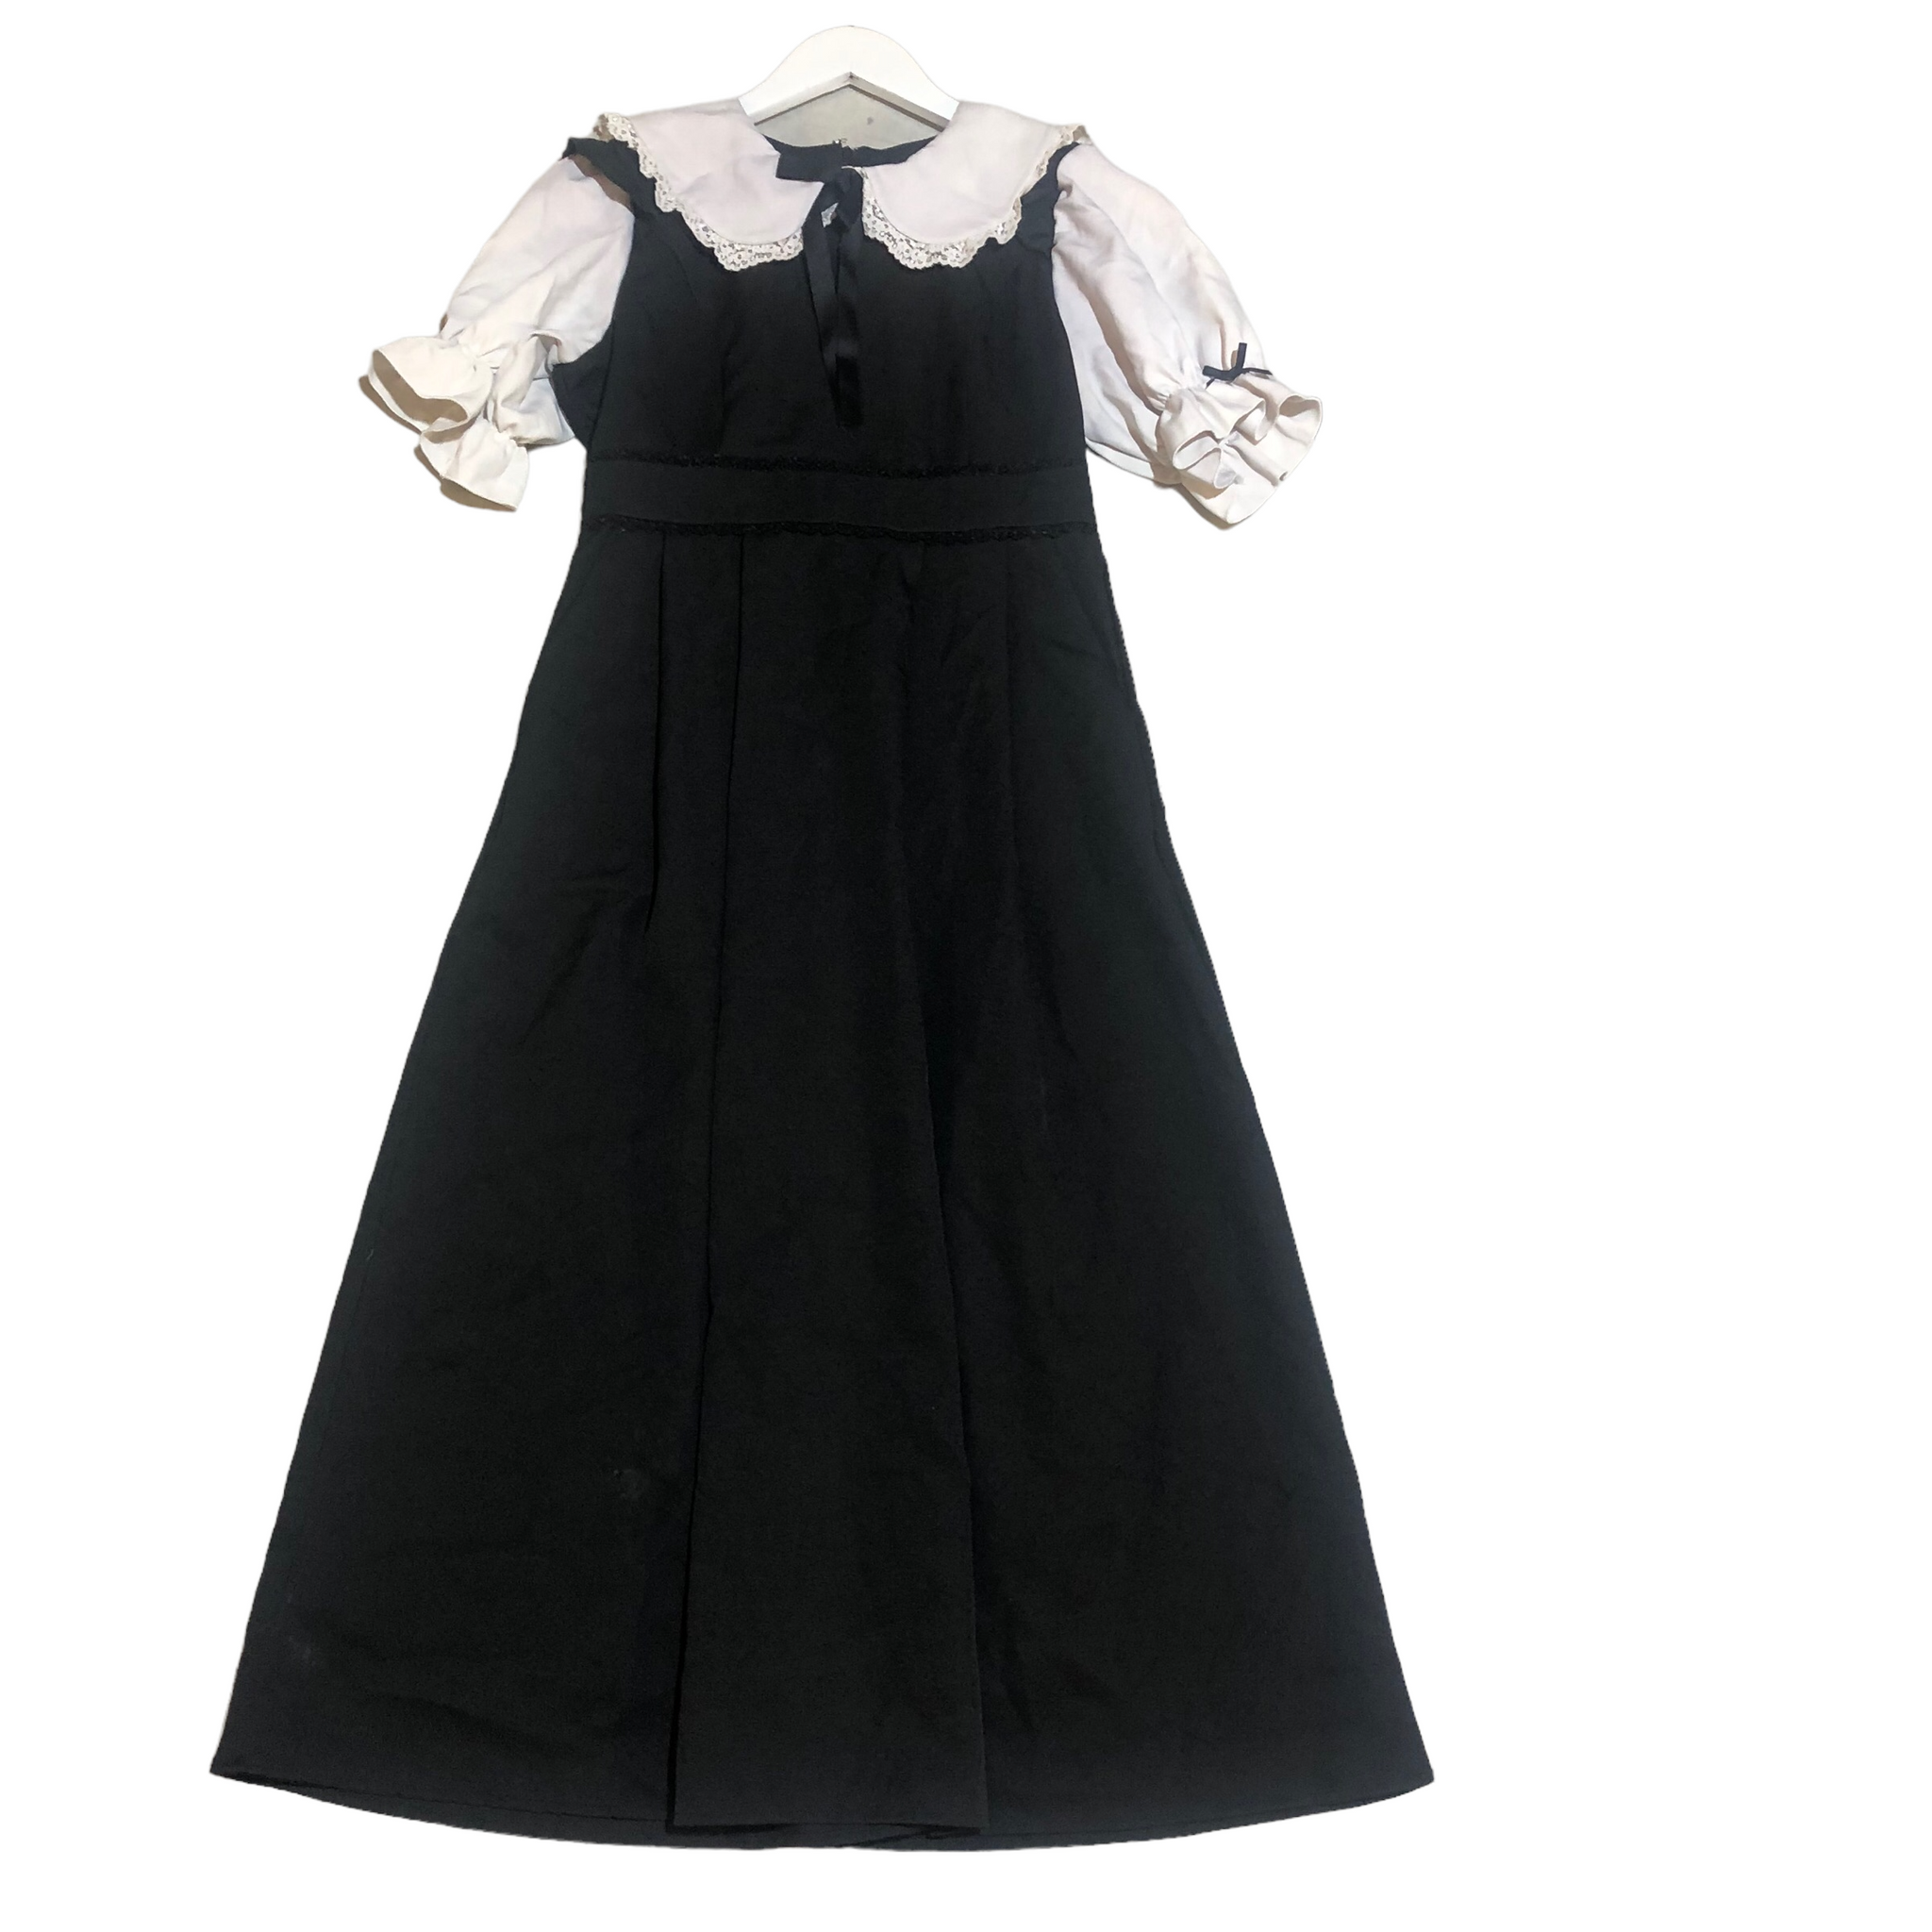 Lolita Style Dress by Dearly